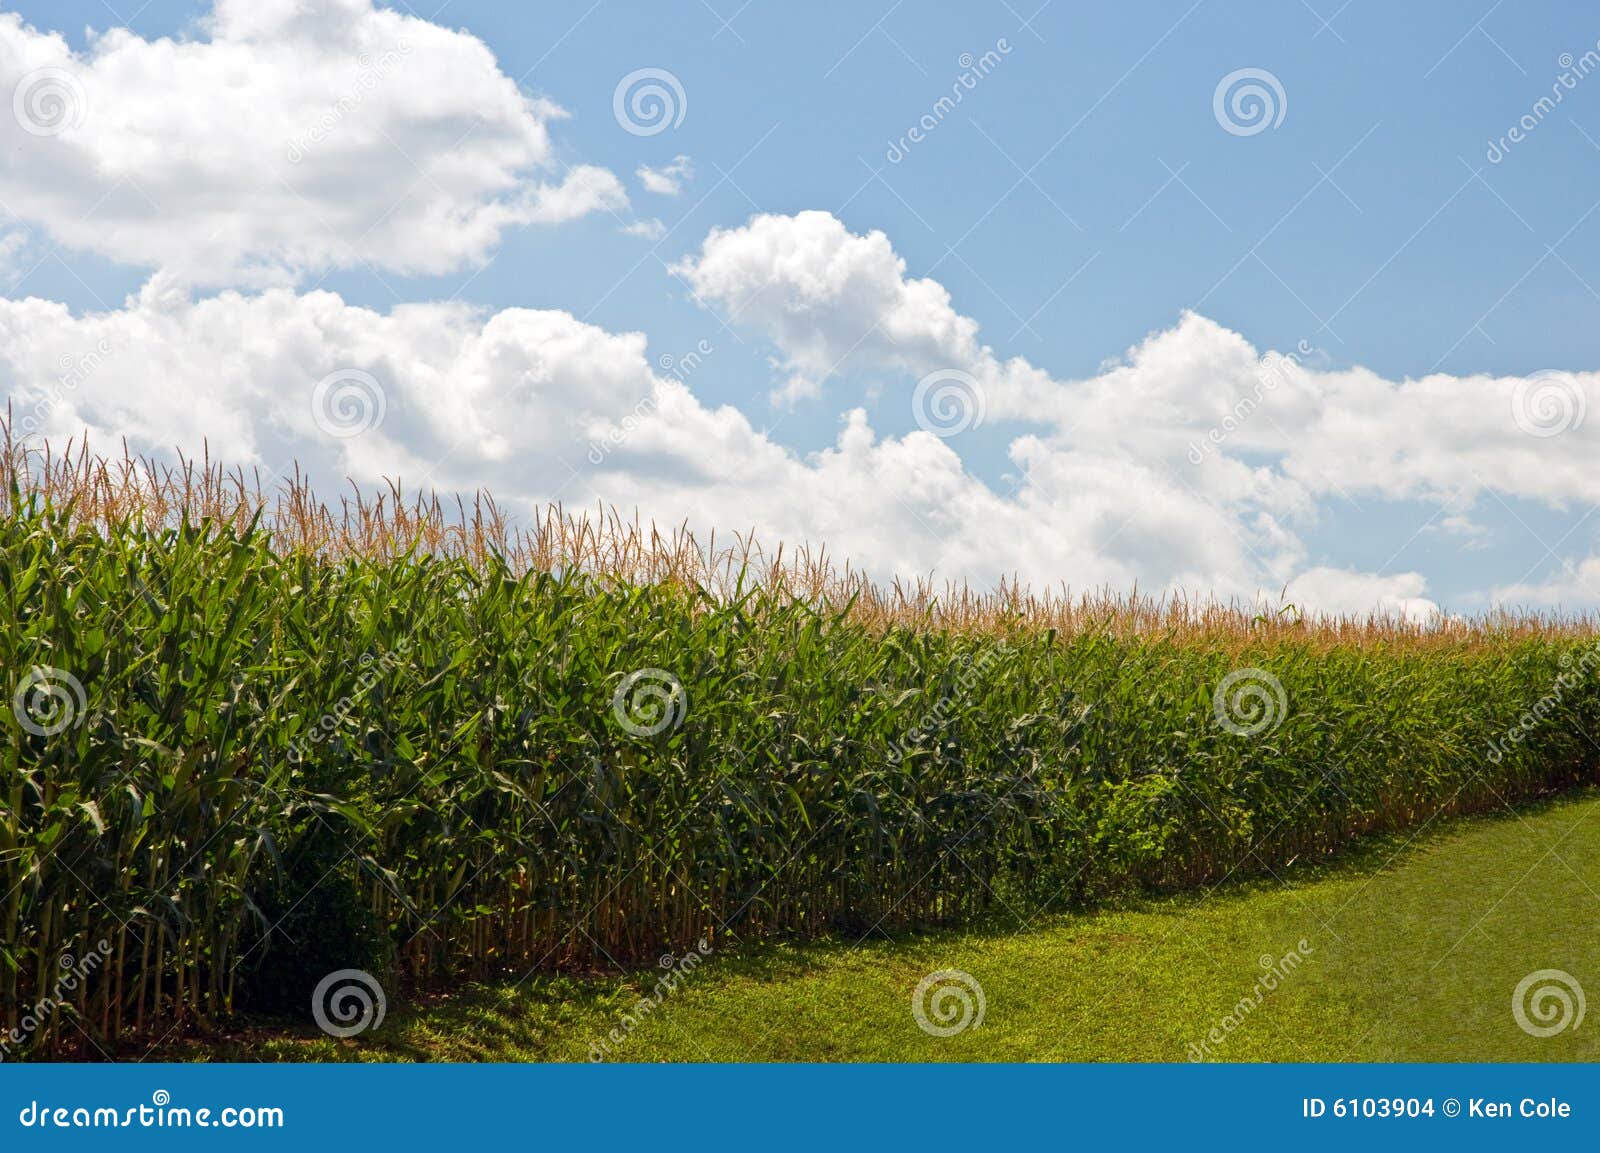 cornfield under summer sky